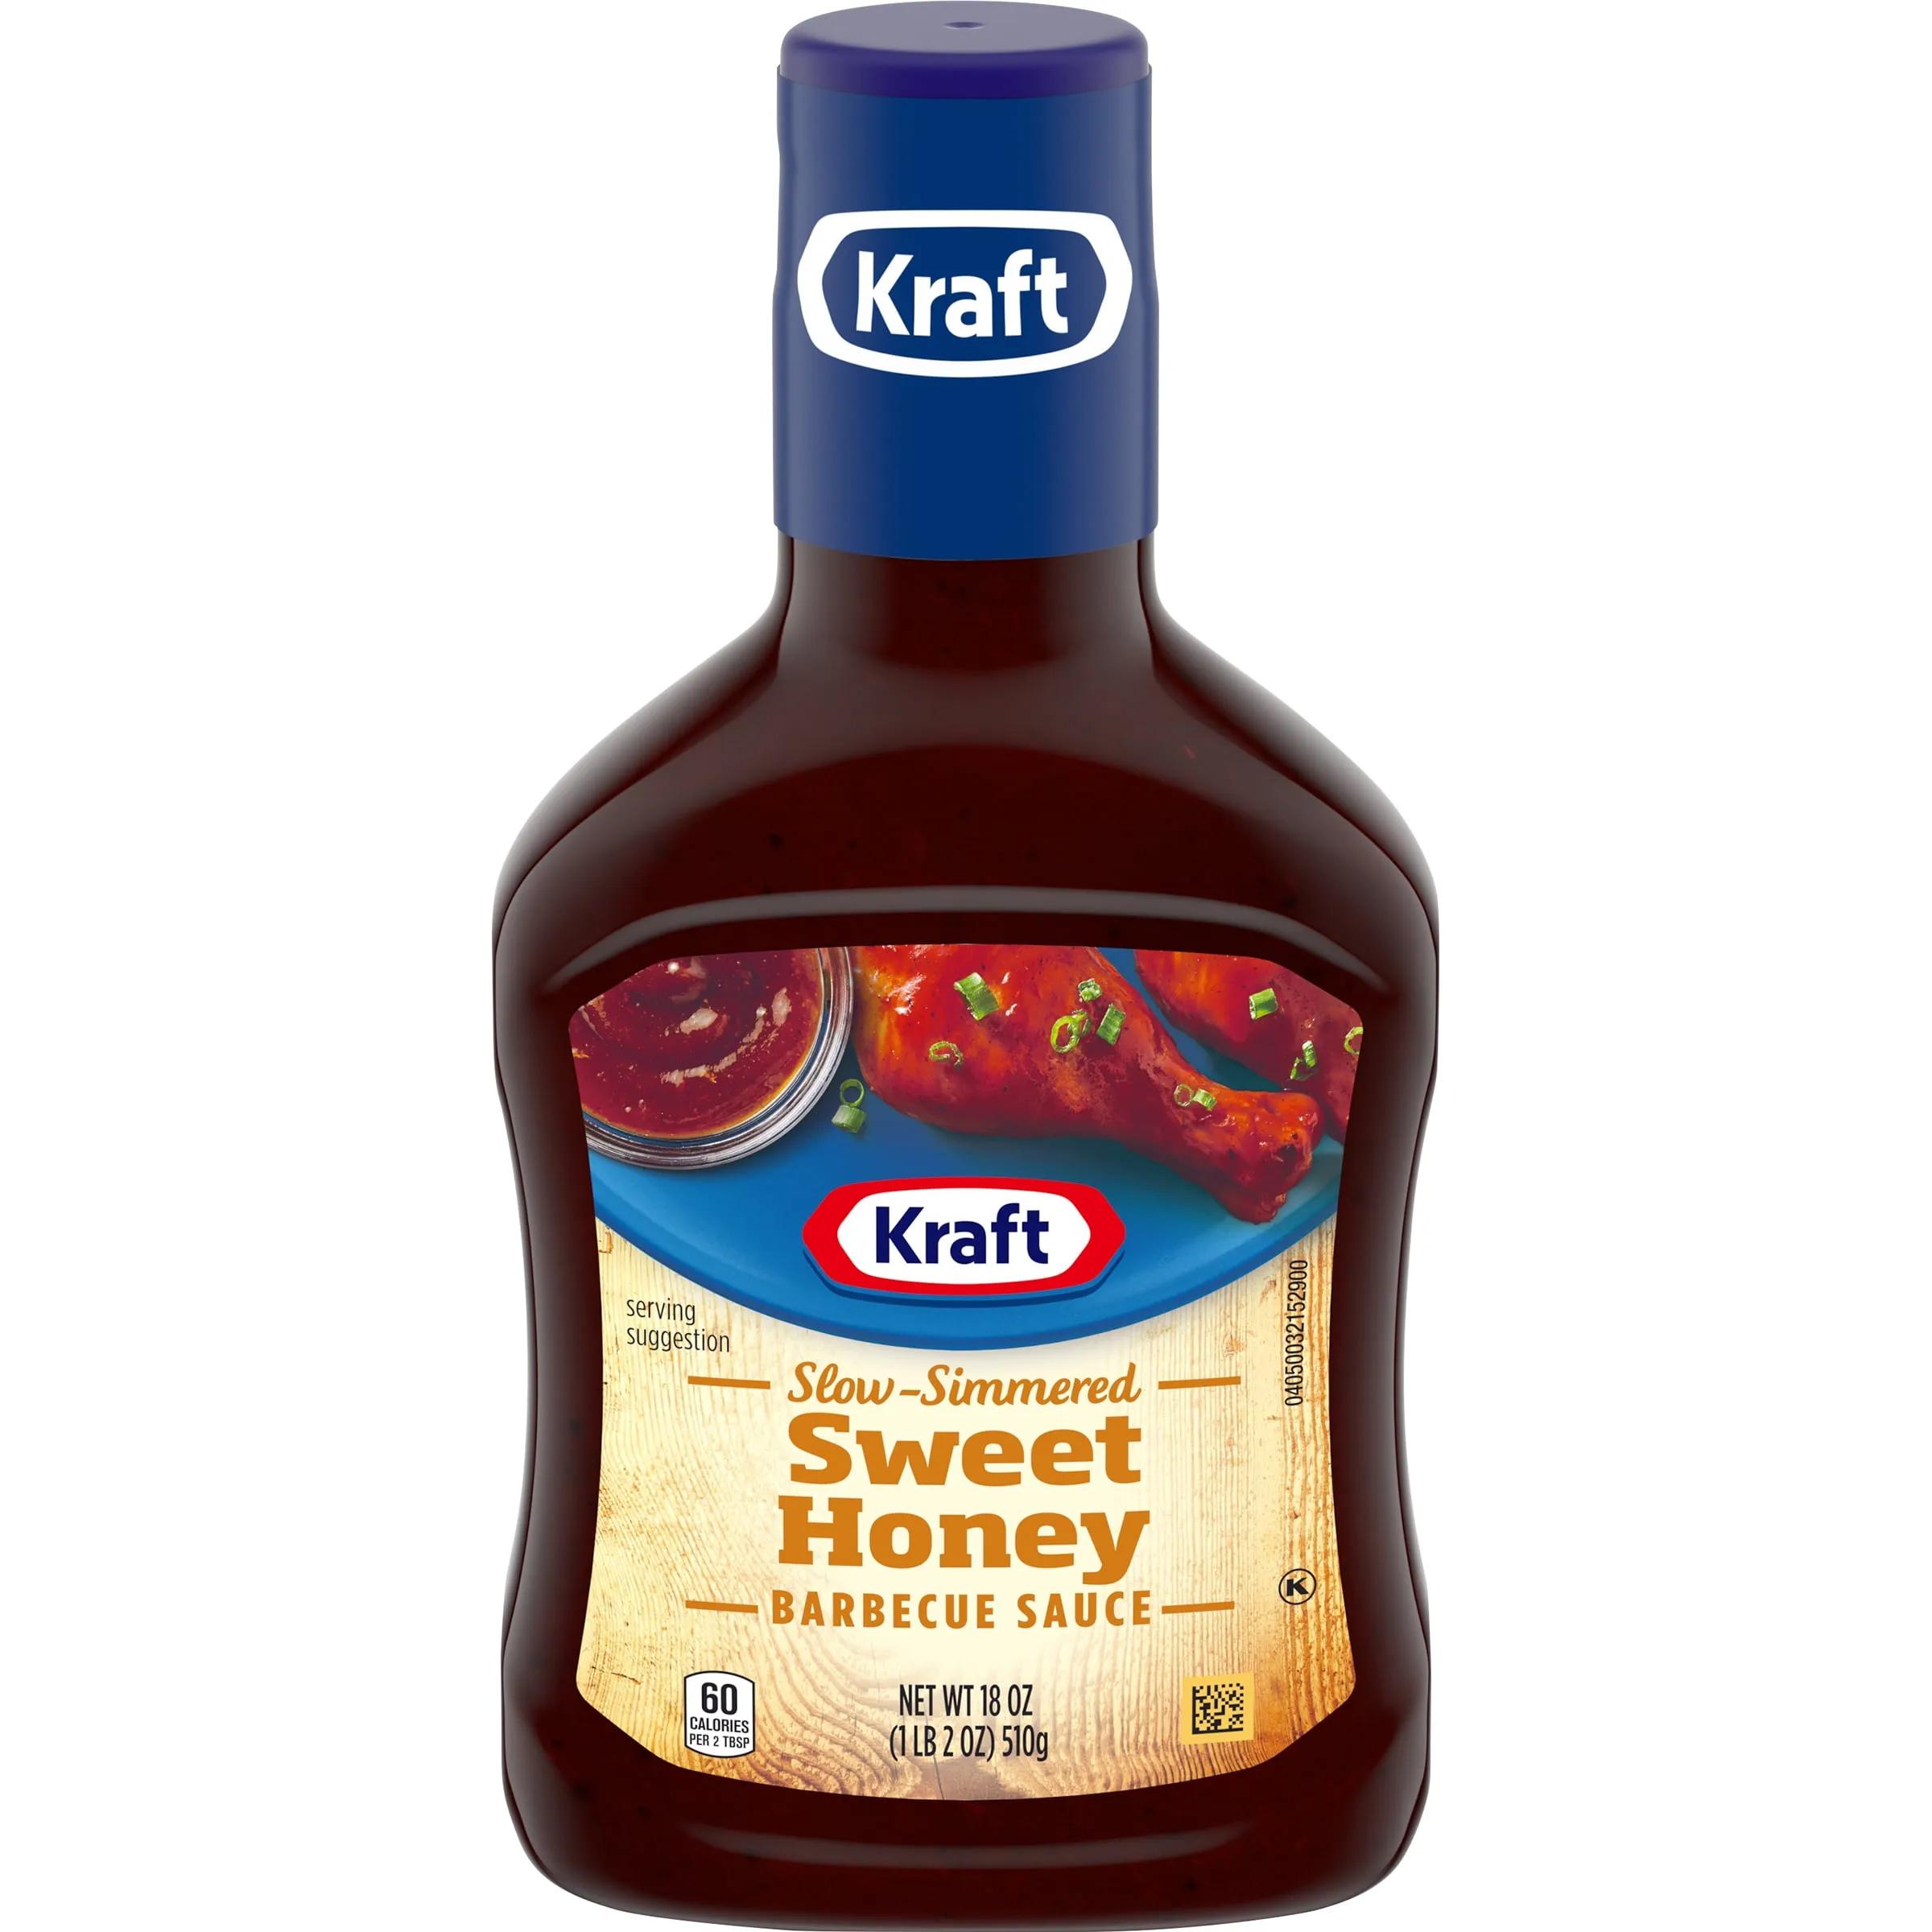 Kraft Sweet Honey Barbecue Sauce, 18 oz Bottle - Walmart.com - Walmart.com